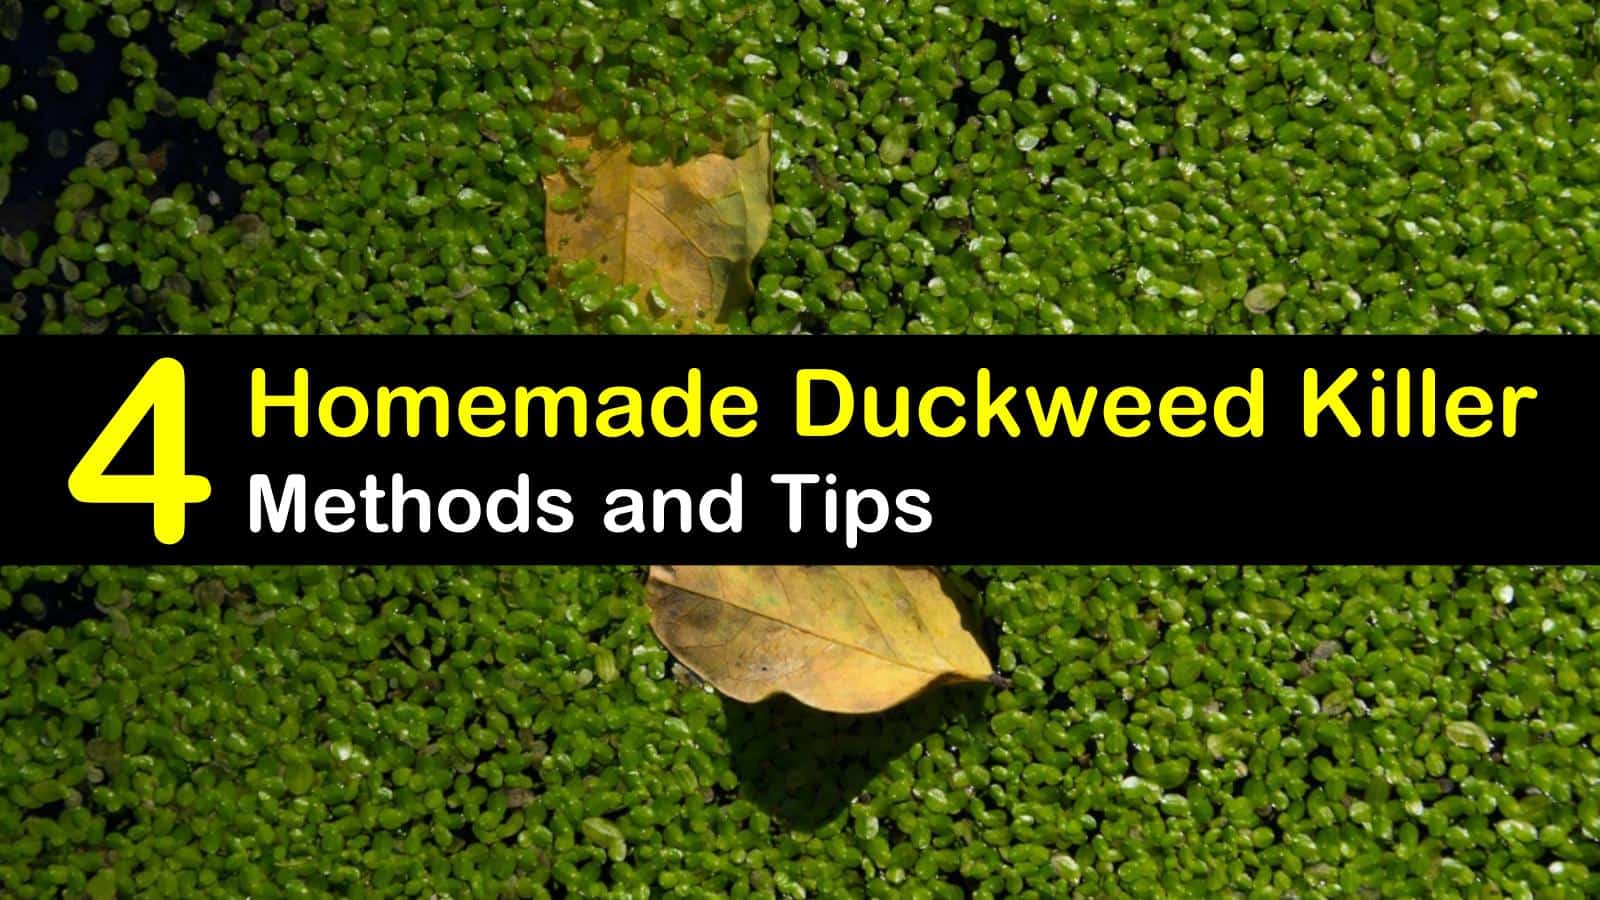 homemade duckweed killer titleimg1